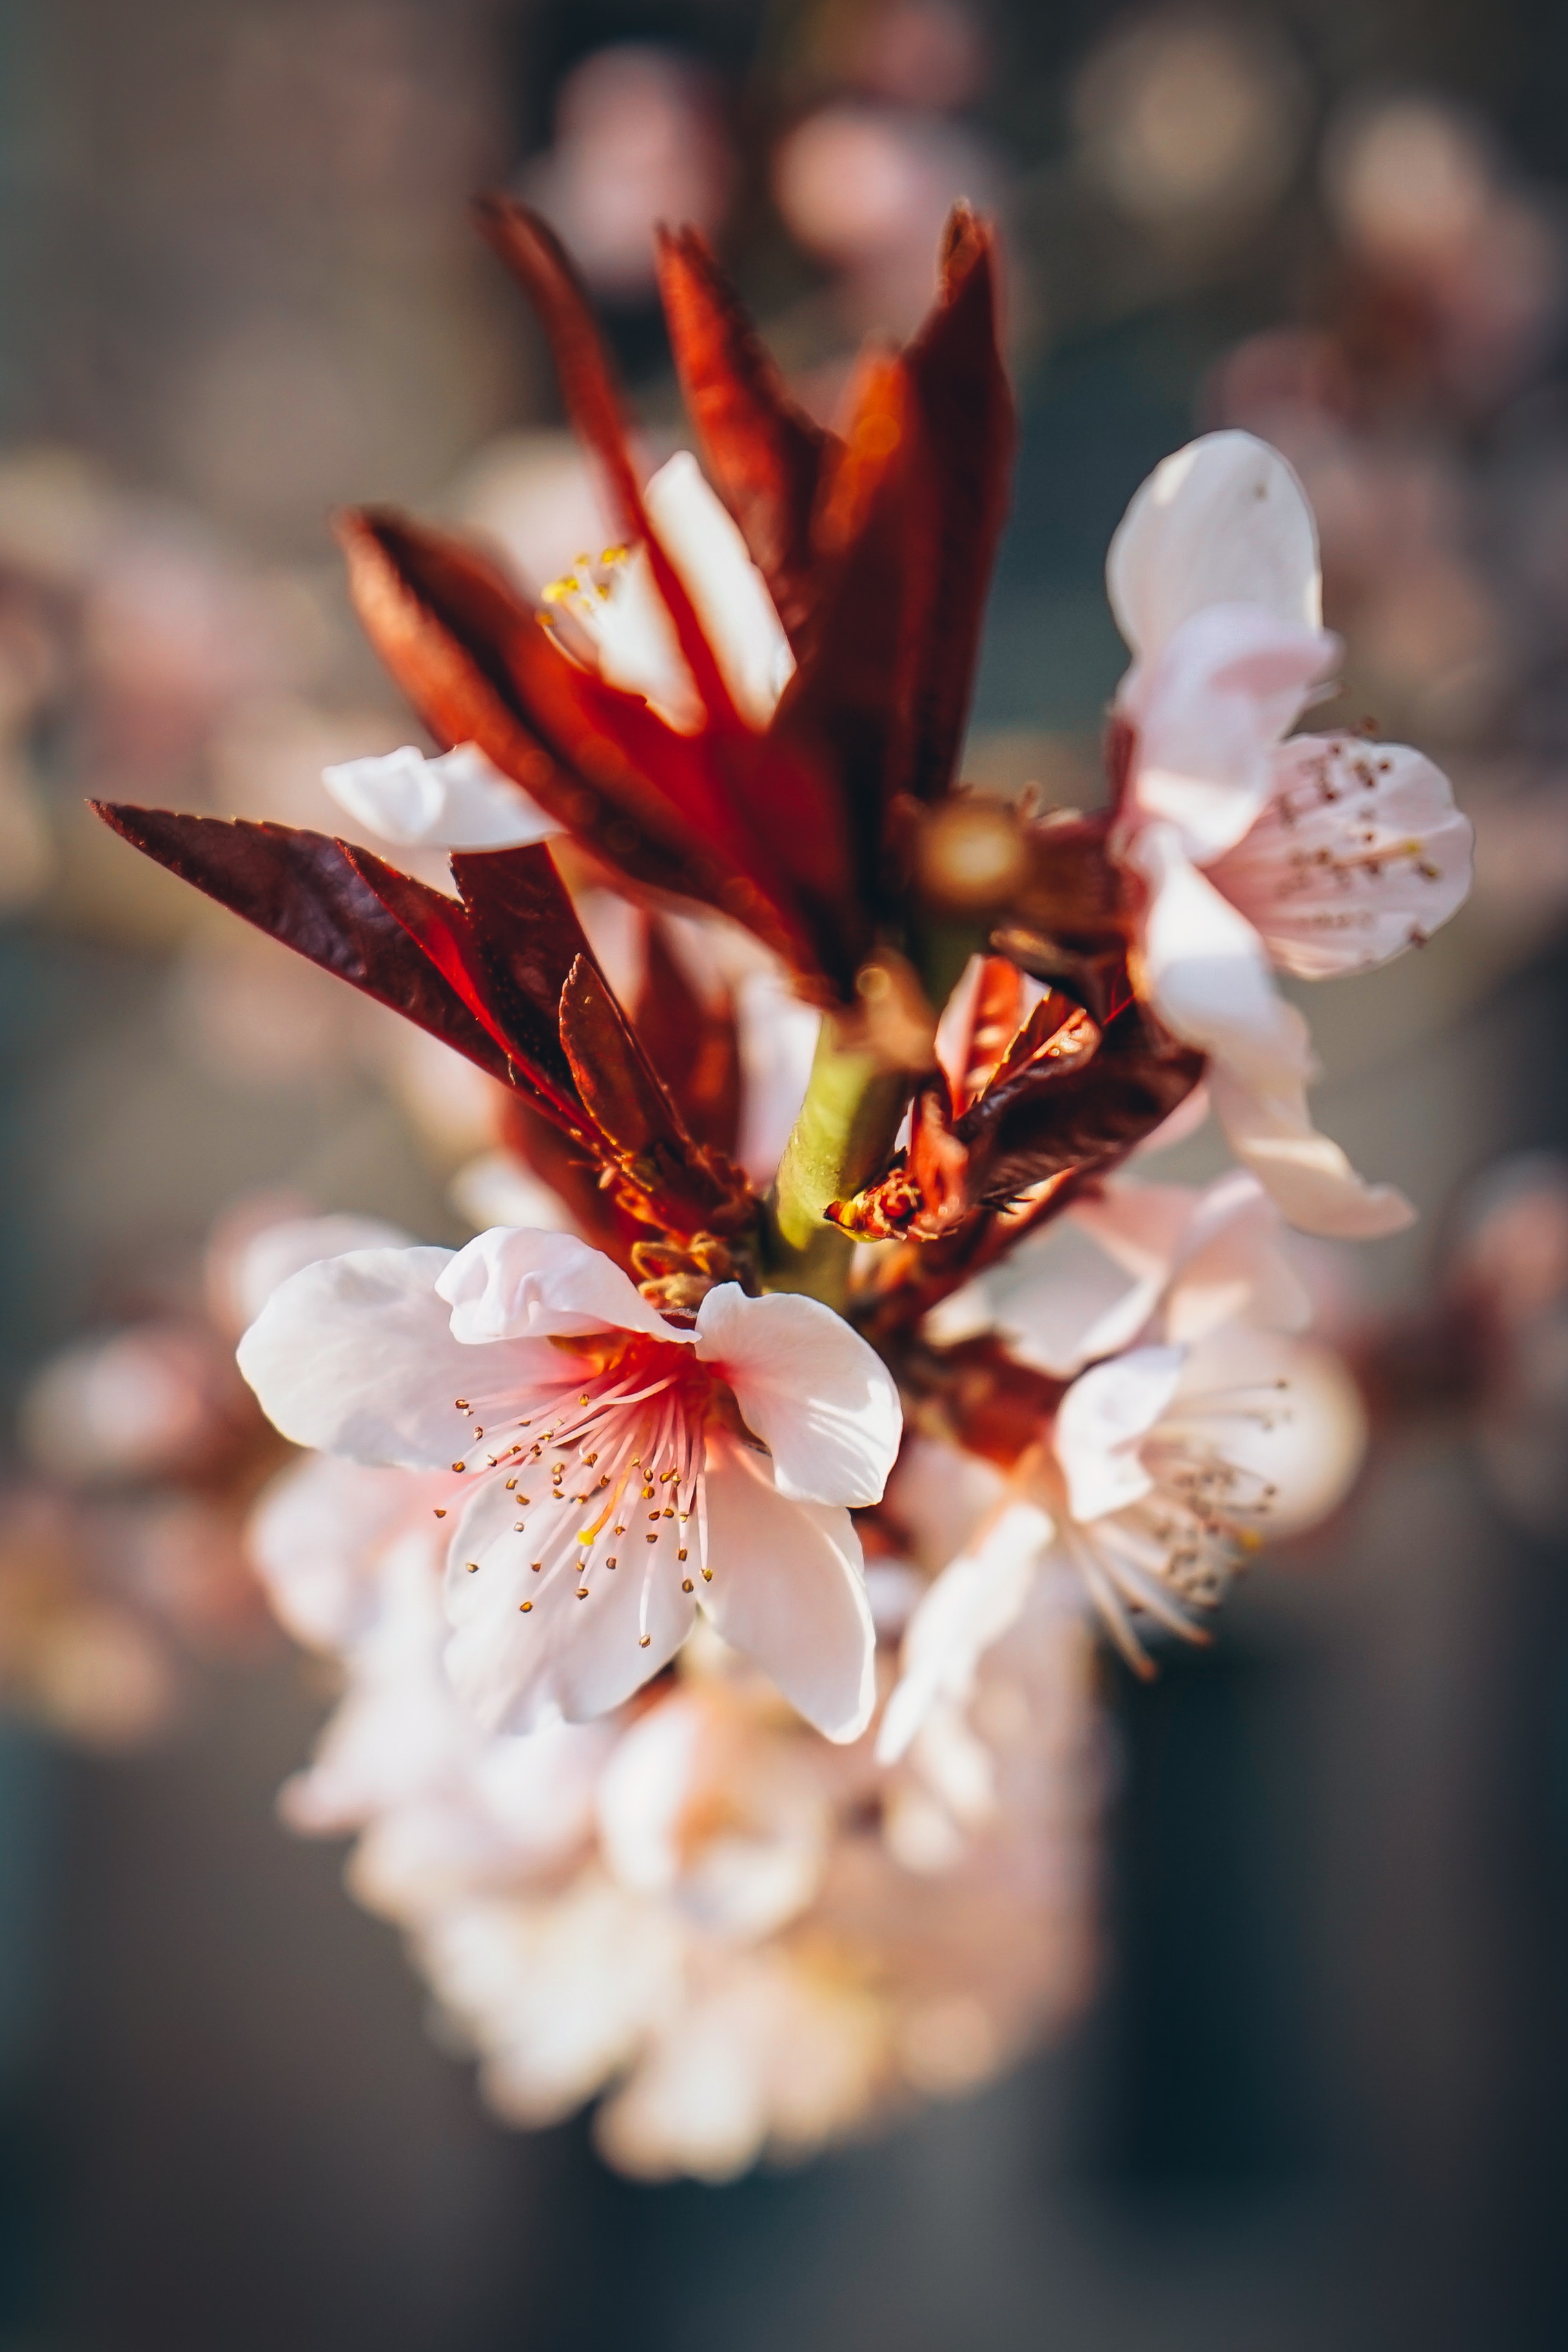 Plum Blossom by Beijing Photographer, Lisheng Chang on Unsplash